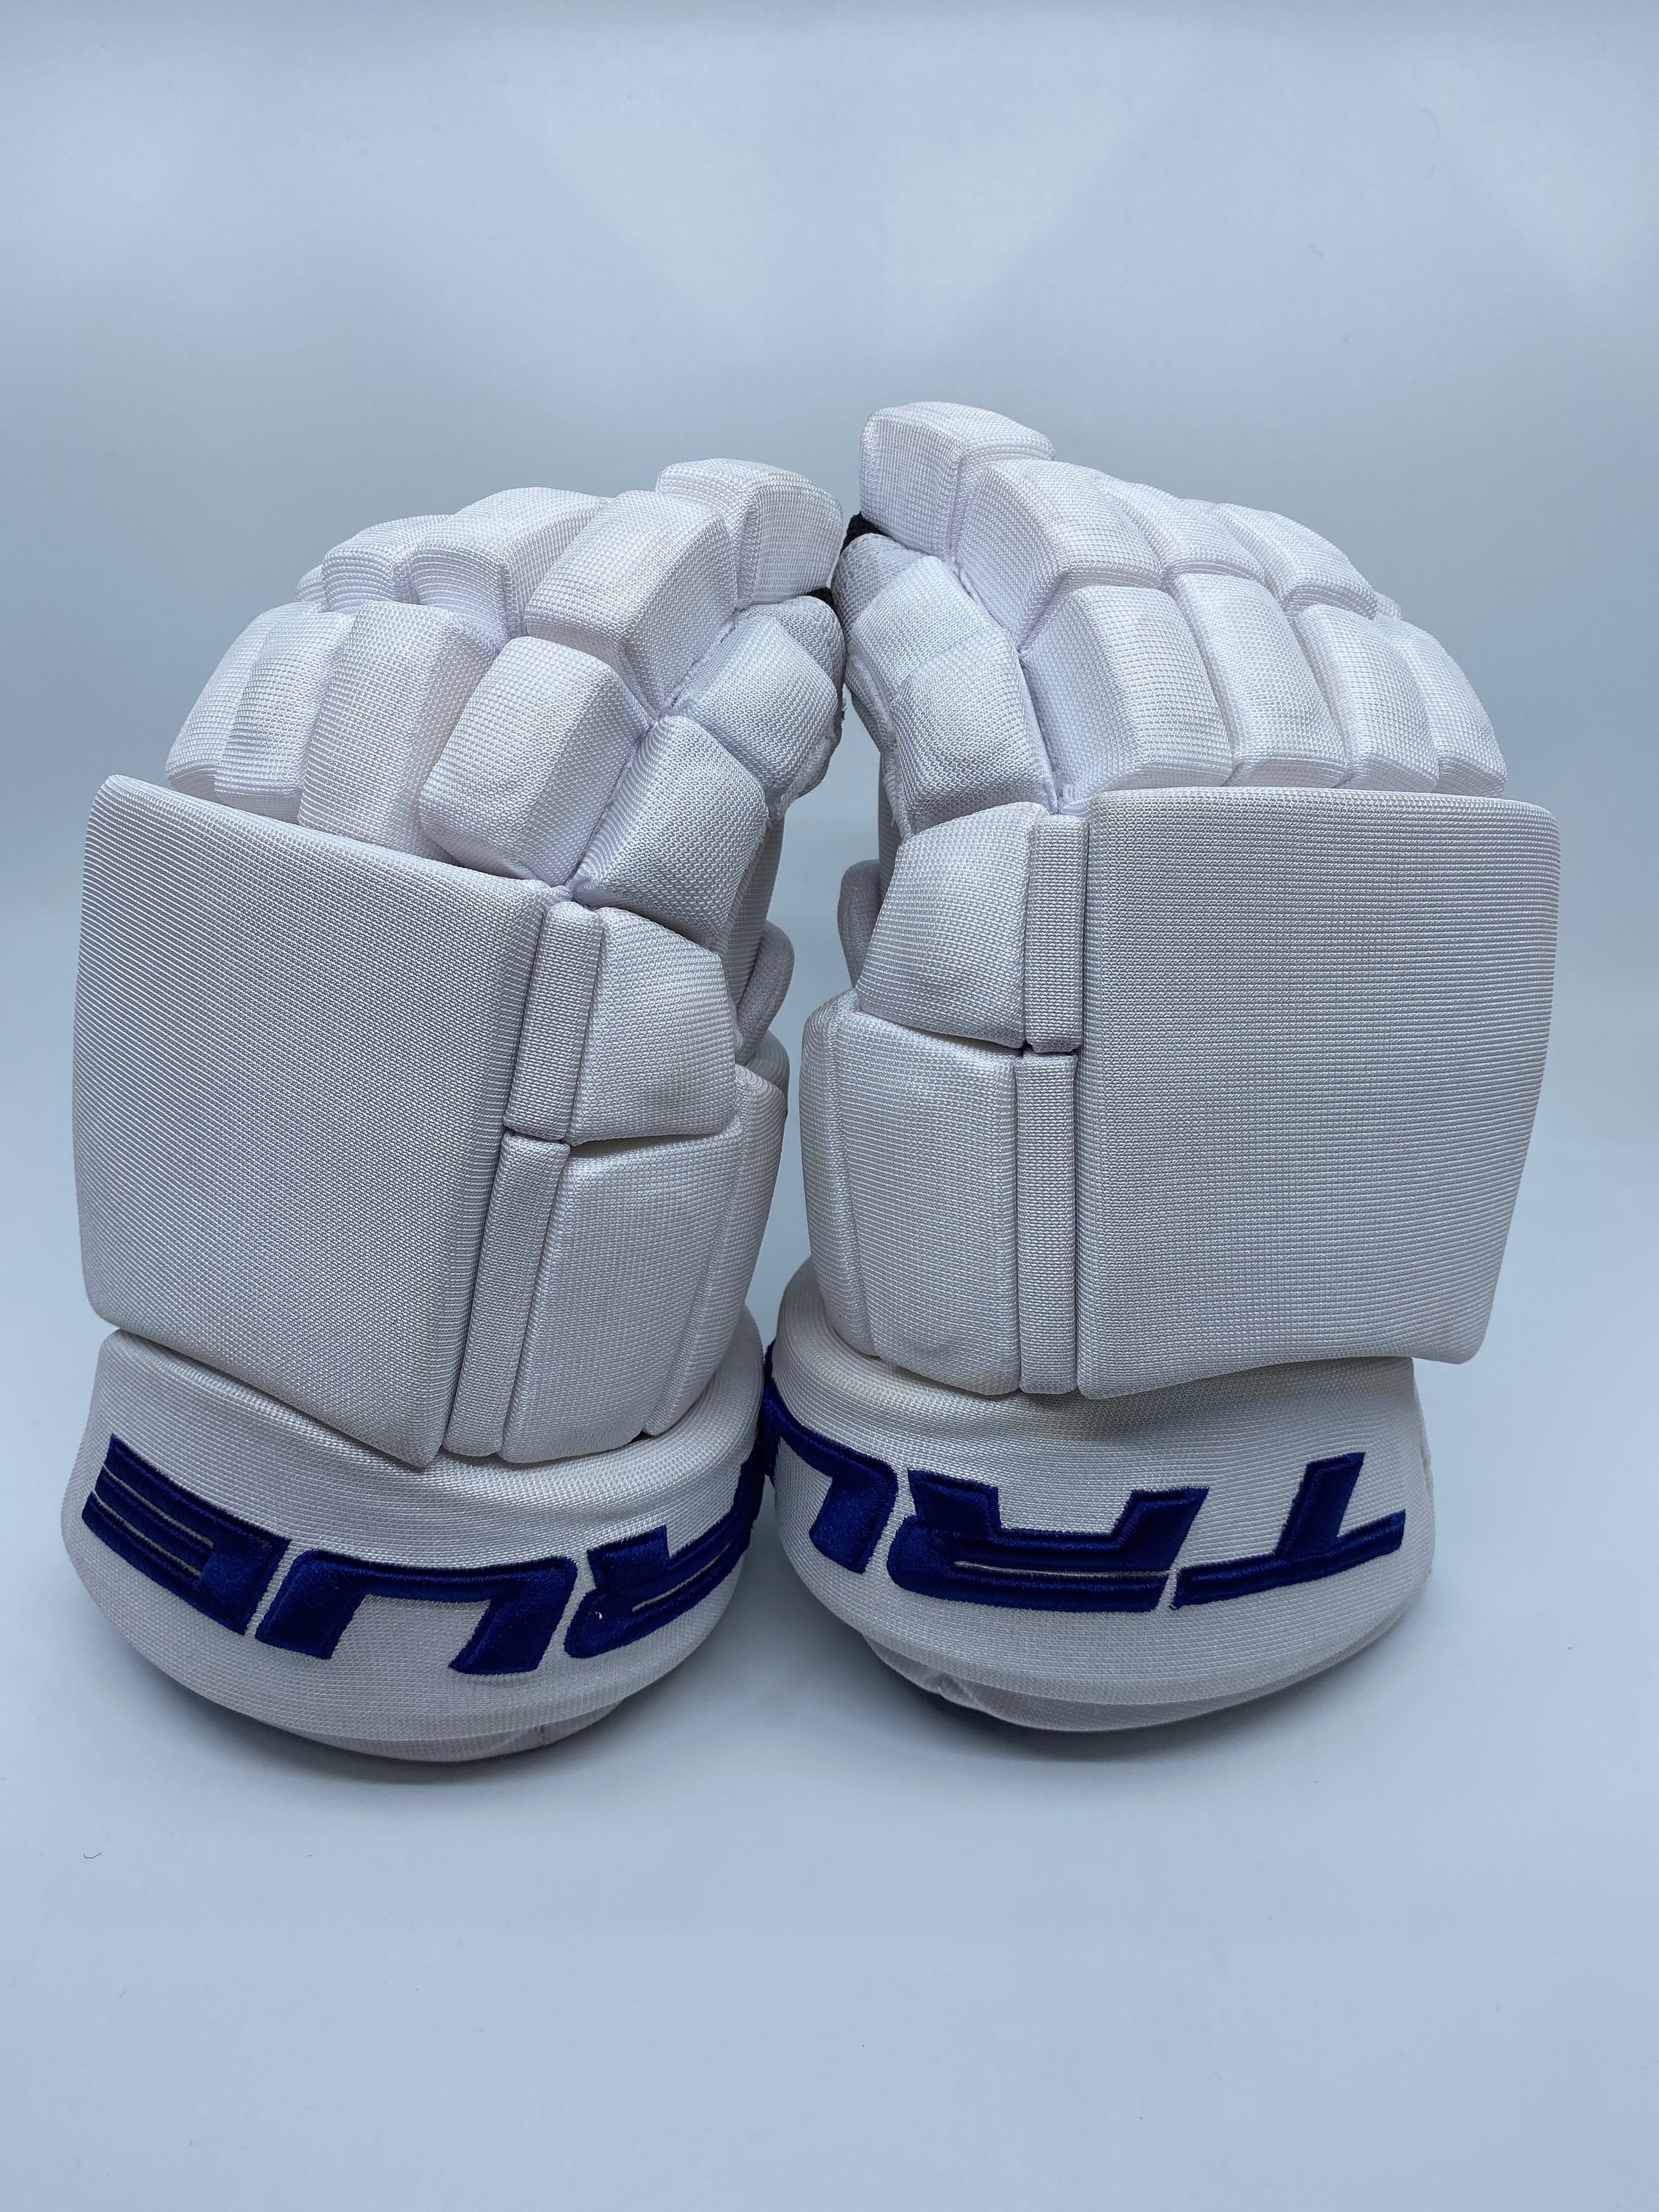 Marner TML Game Issued White Gloves